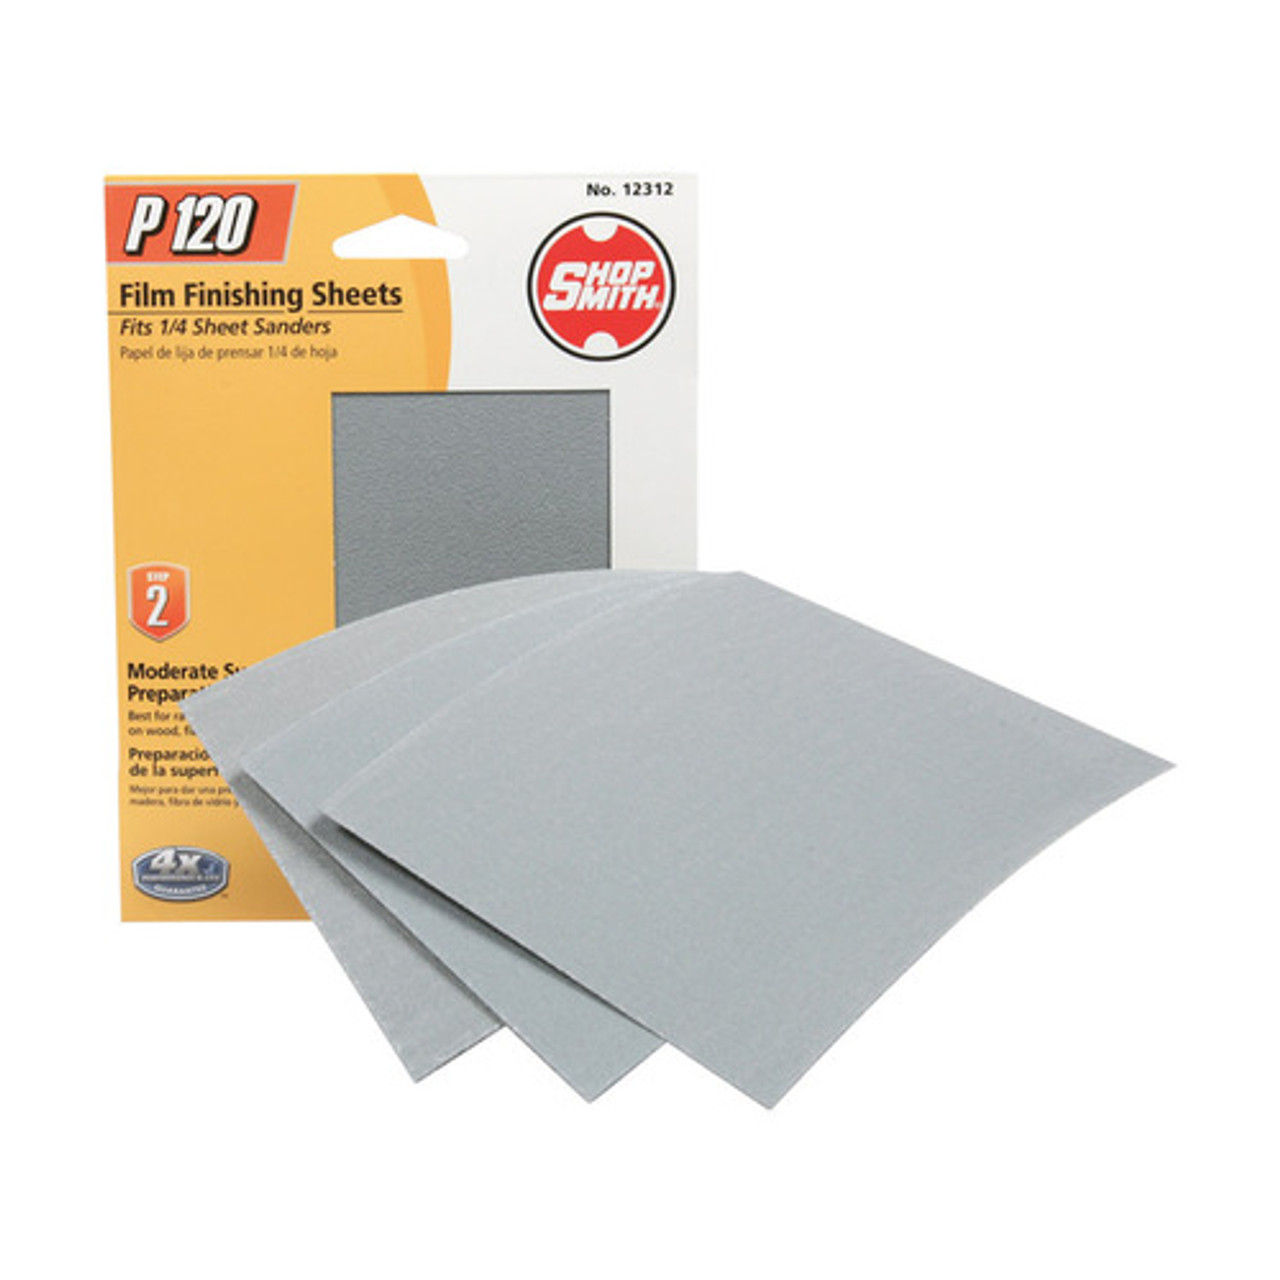 Shopsmith (12312) - 5-1/2 in. L x 4-1/2 in. W 120 Grit Aluminum Oxide 1/4 Sheet Sandpaper - 1-Pack/5-Sheets